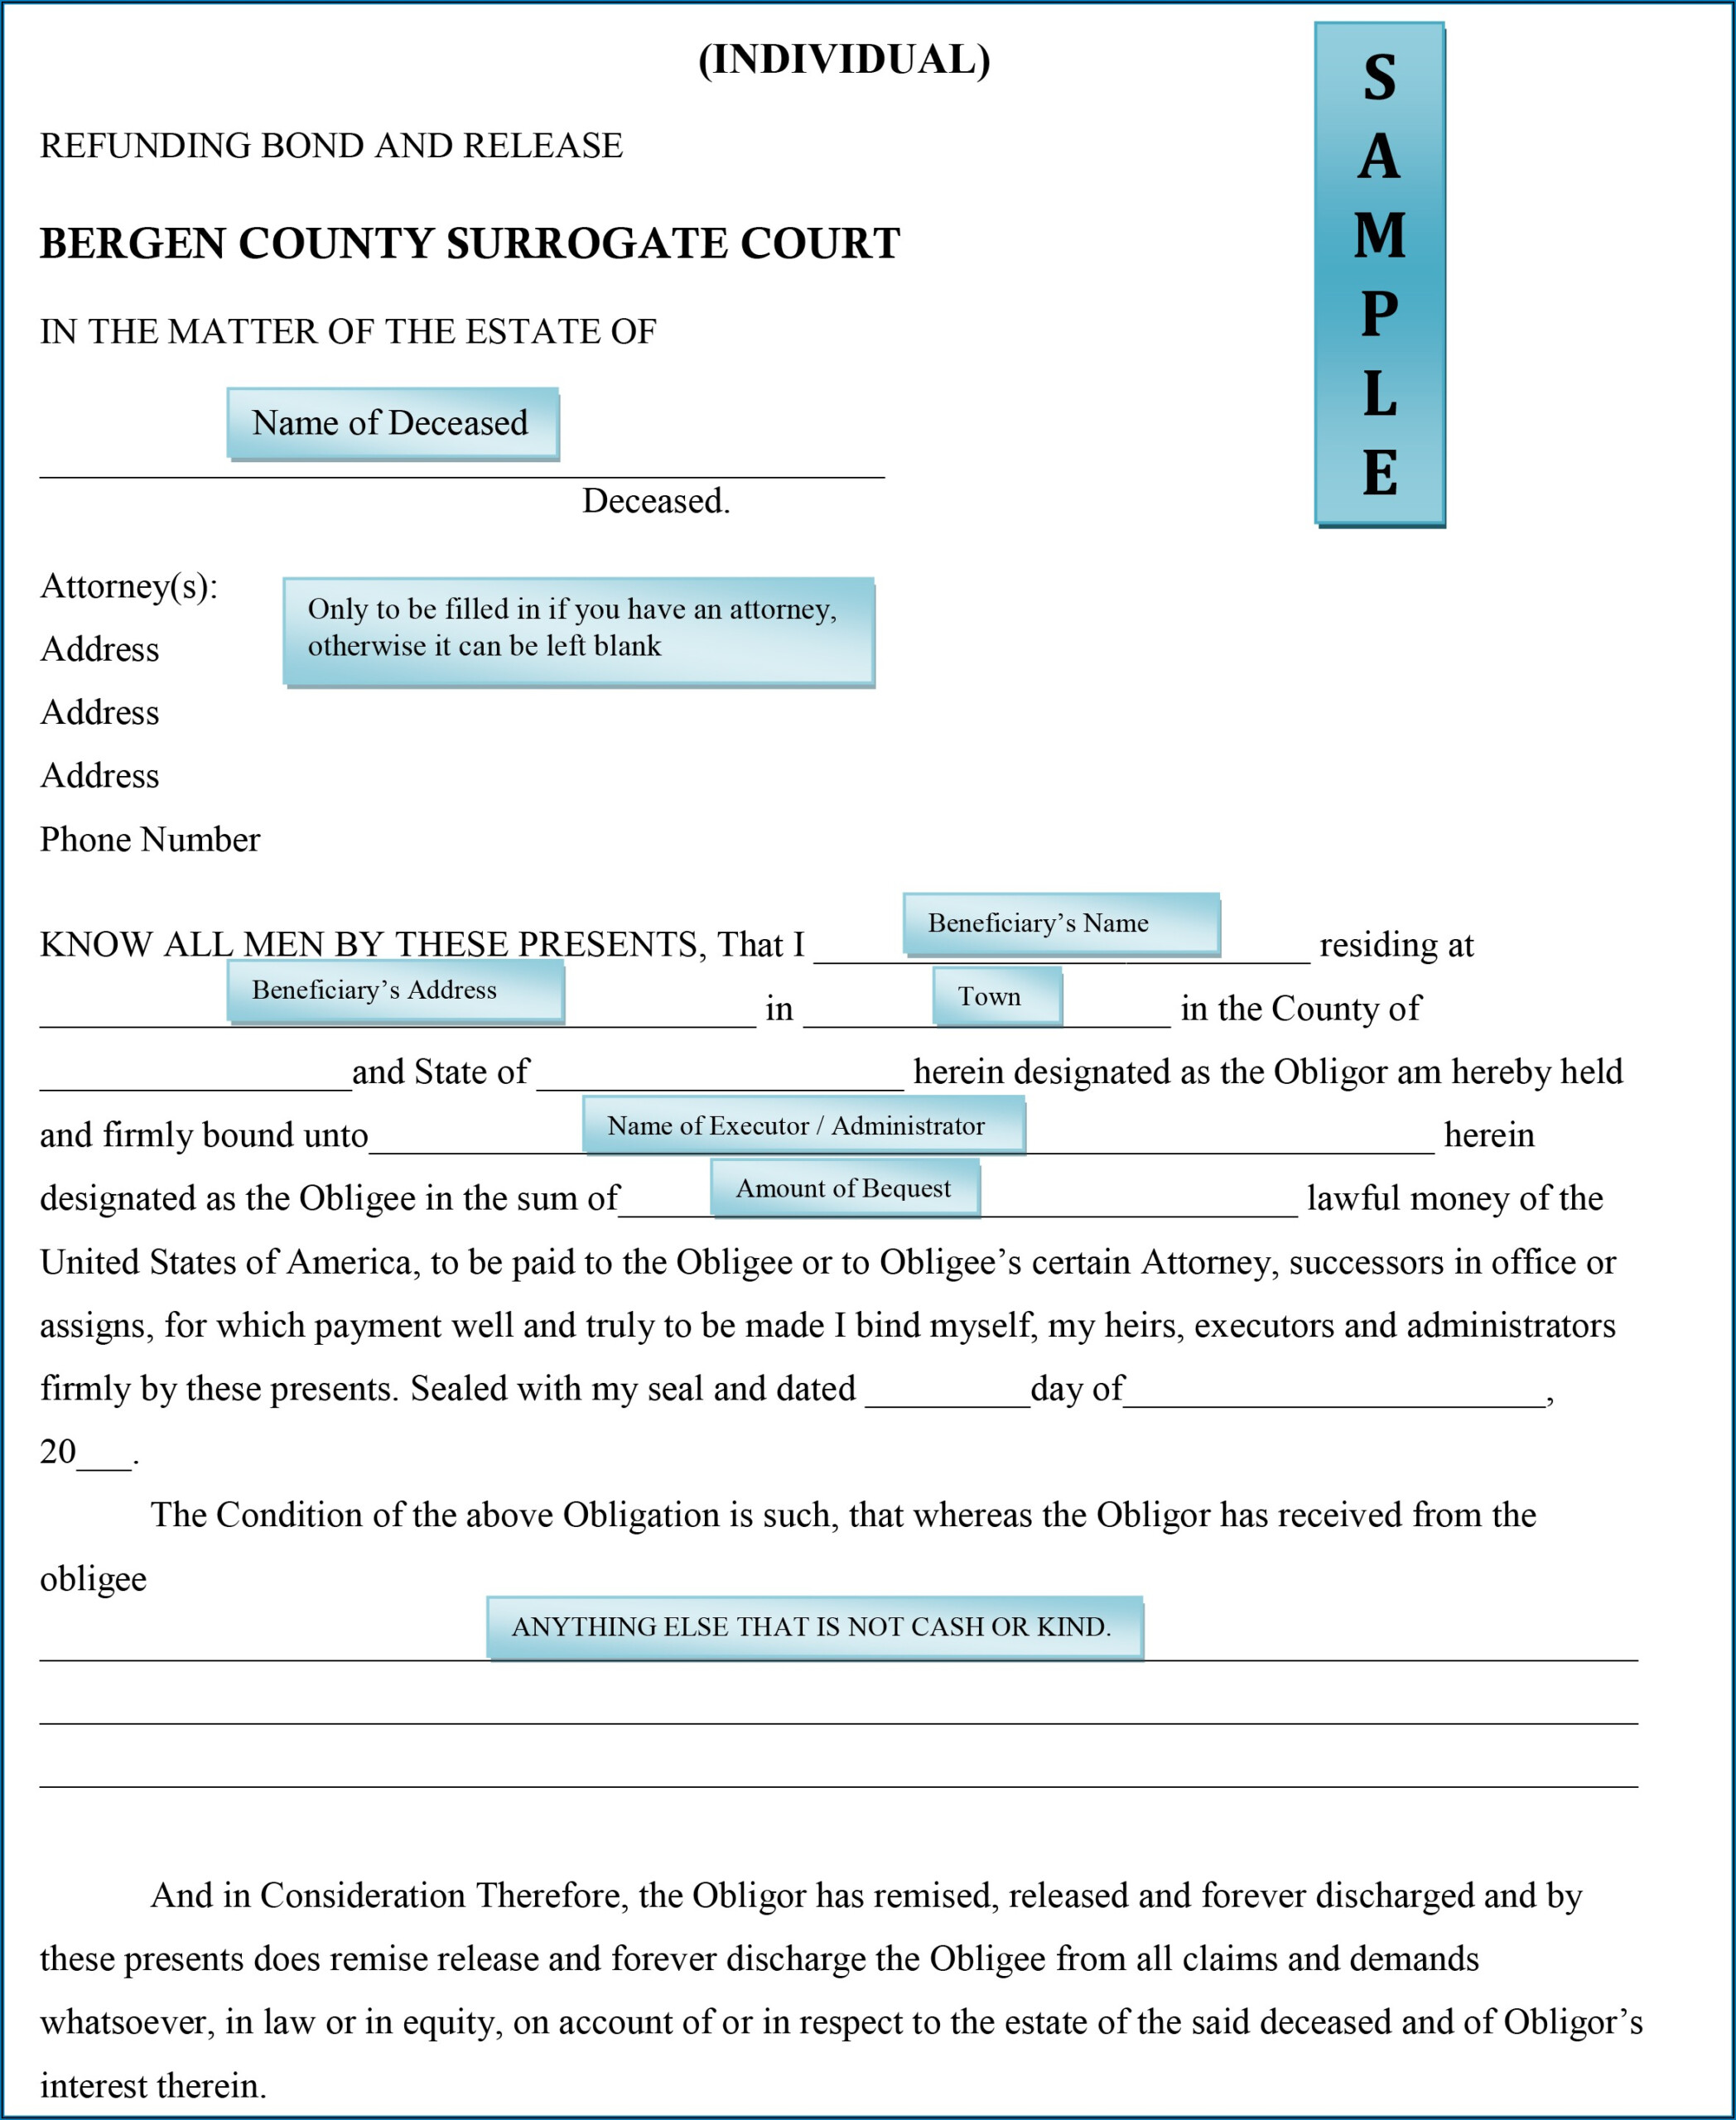 Surrogate s Court Suffolk County Probation Form CountyForms com